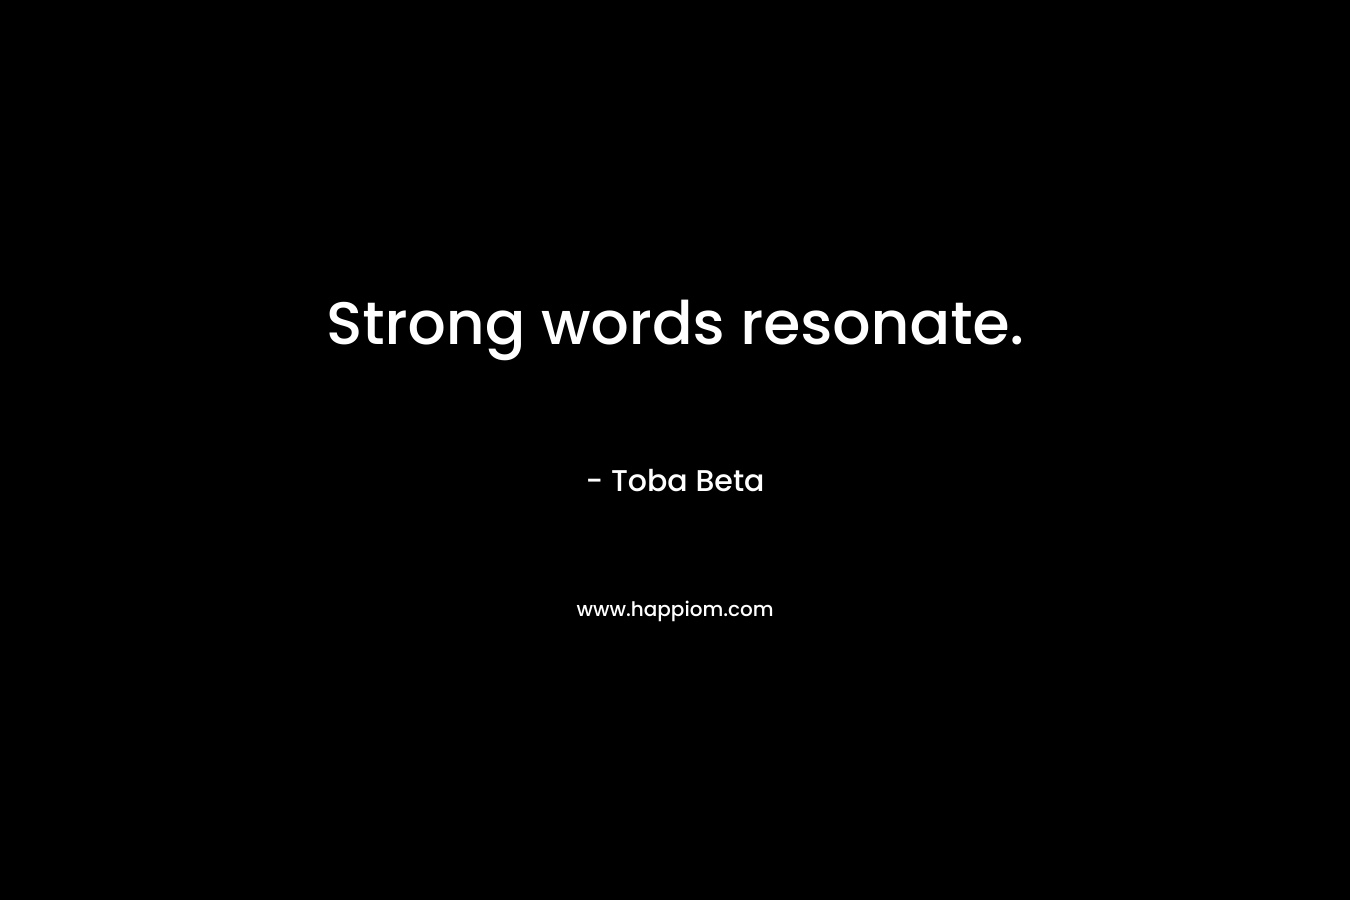 Strong words resonate. – Toba Beta